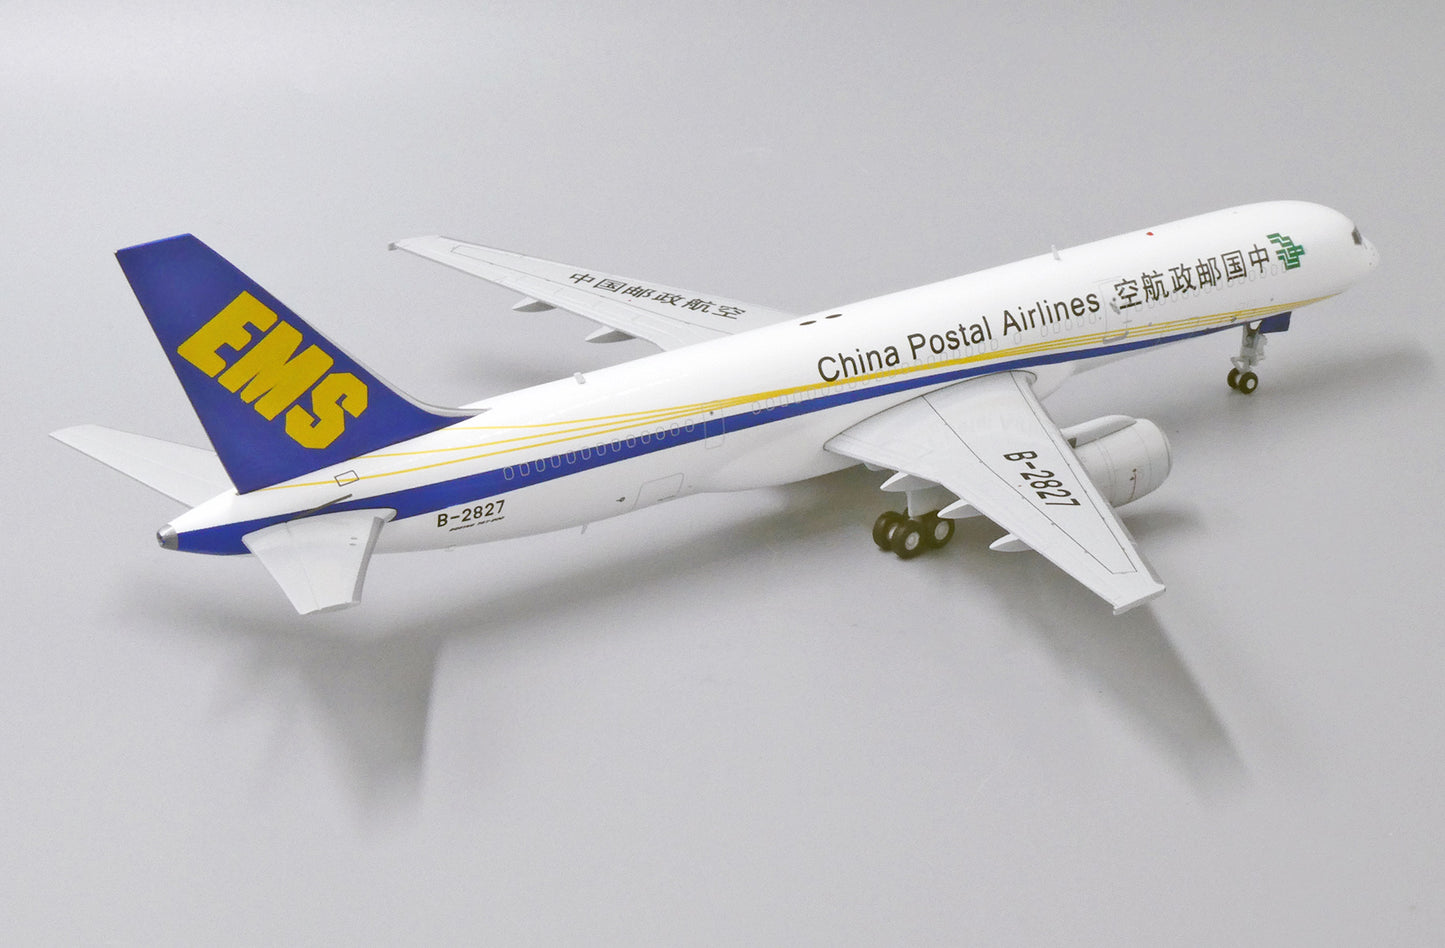 *1/400 China Postal Airlines B 757-200PCF JC Wings LH4CYZ094